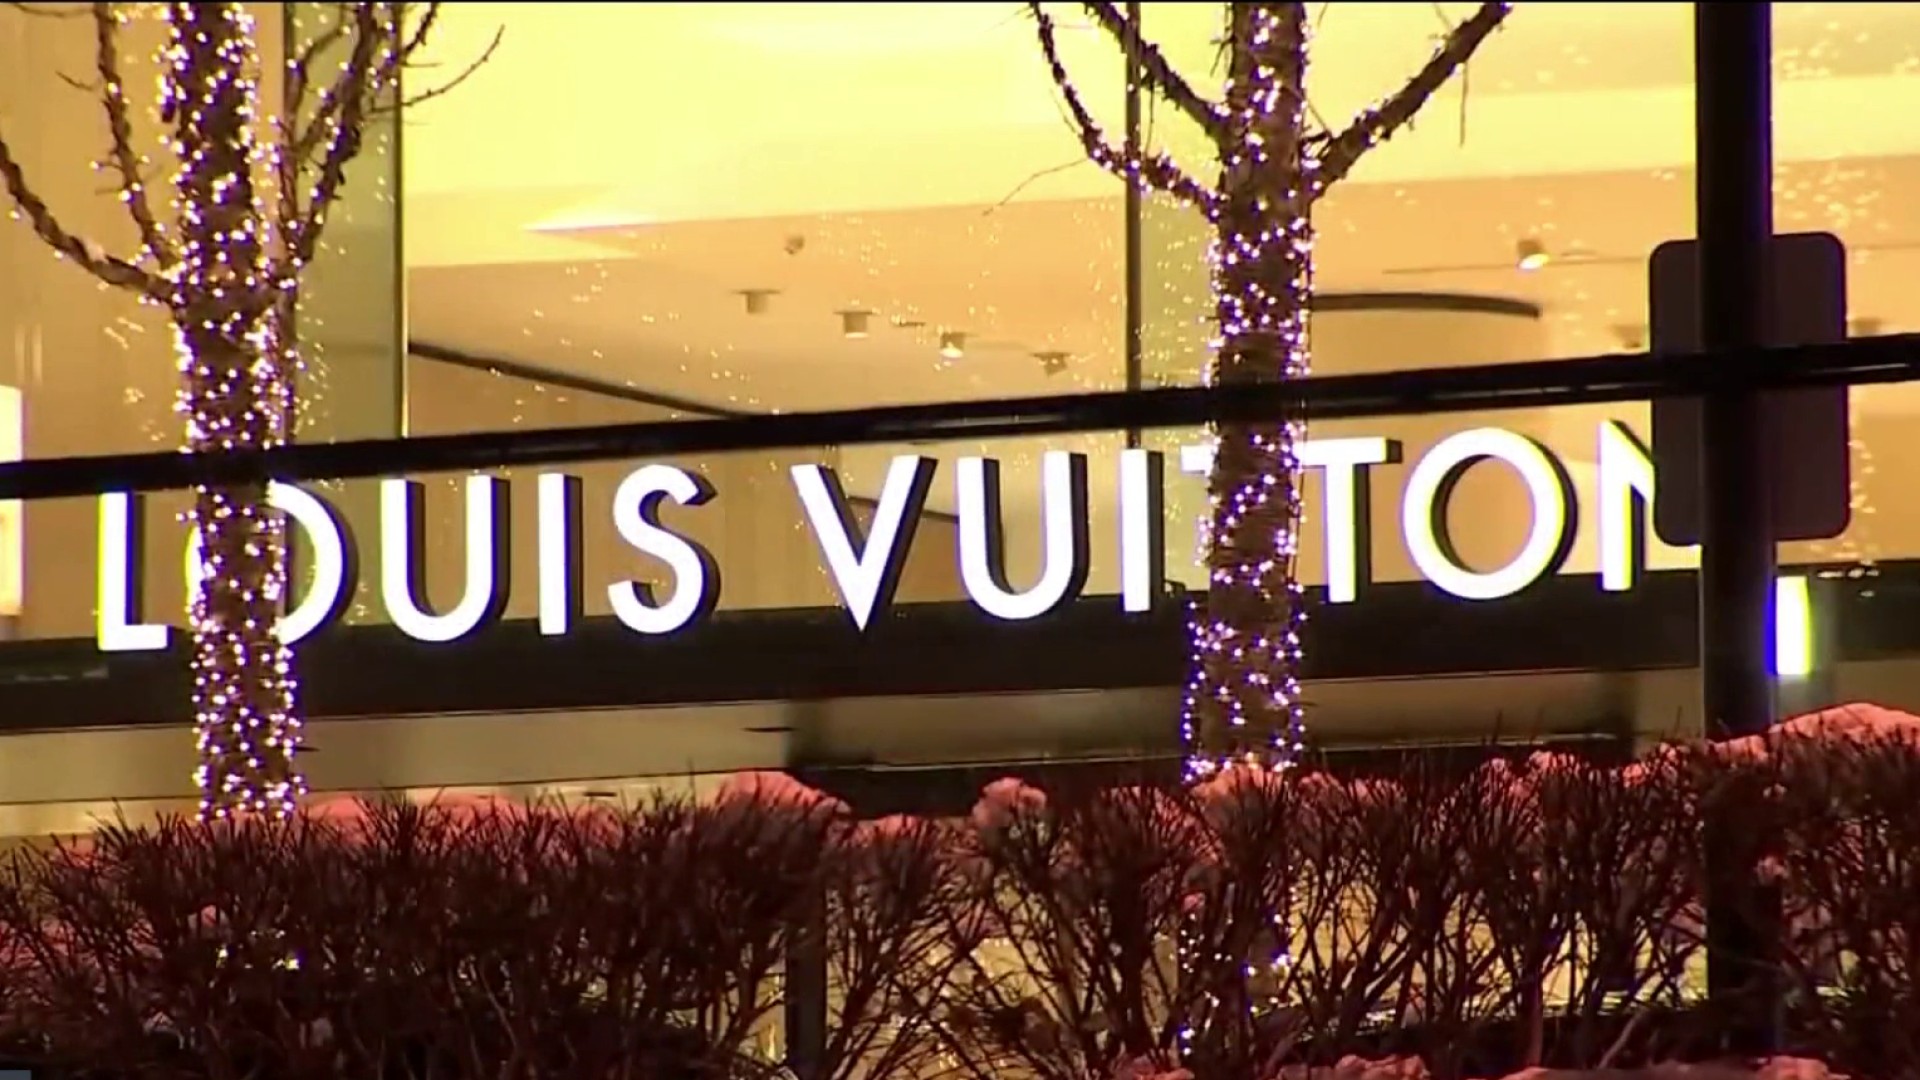 Luxury Larceny: Group Robs Long Island Lous Vuitton, Authorities Say